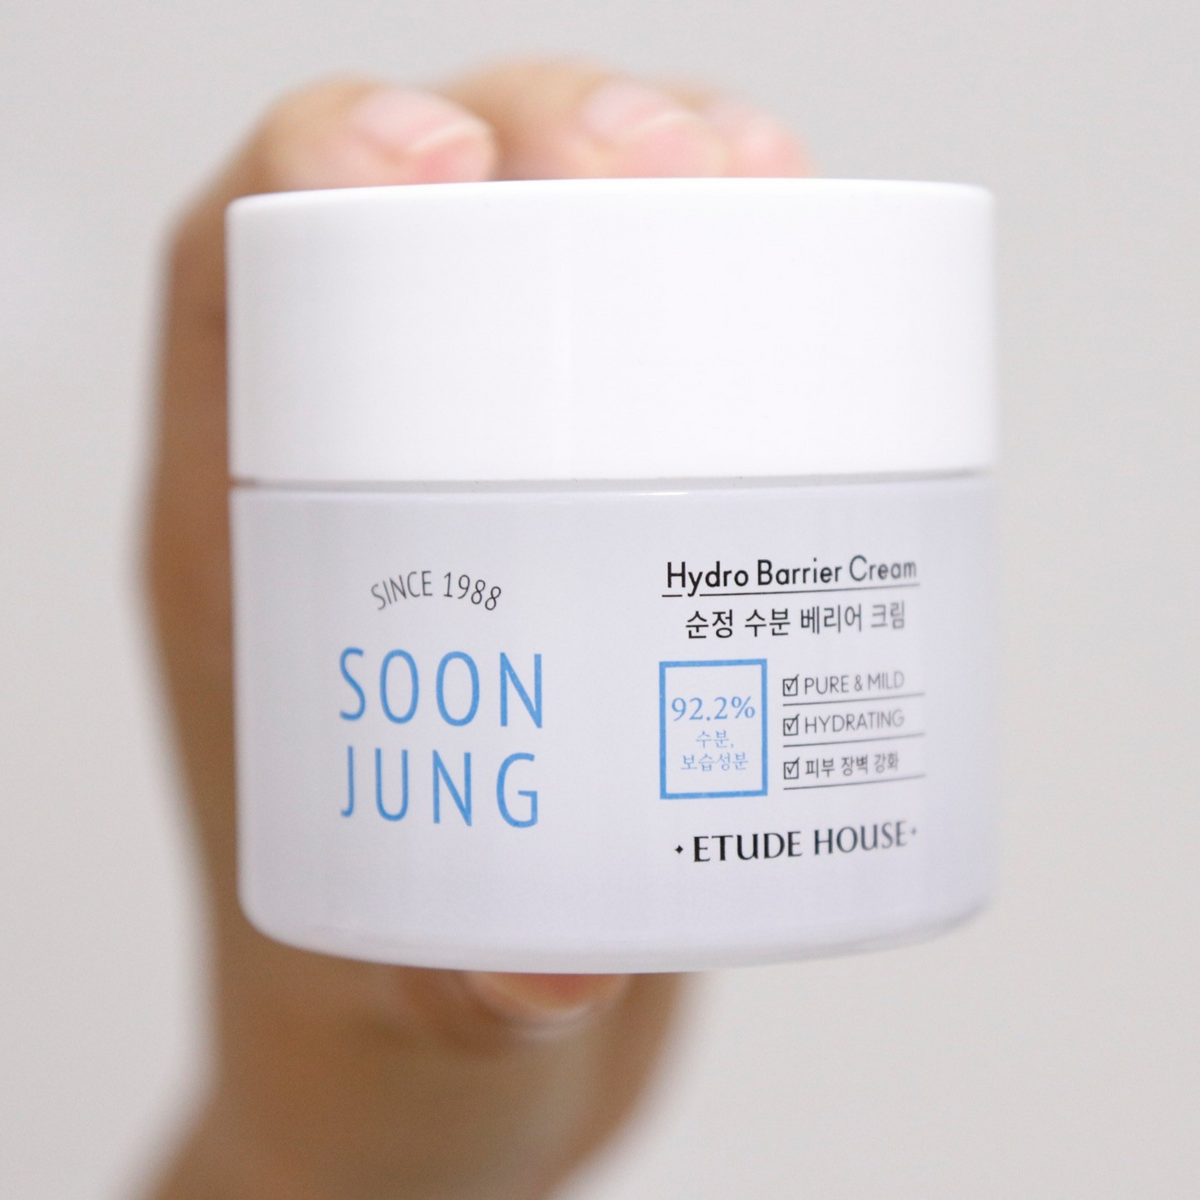 Etude SoonJung Hydro Barrier Cream